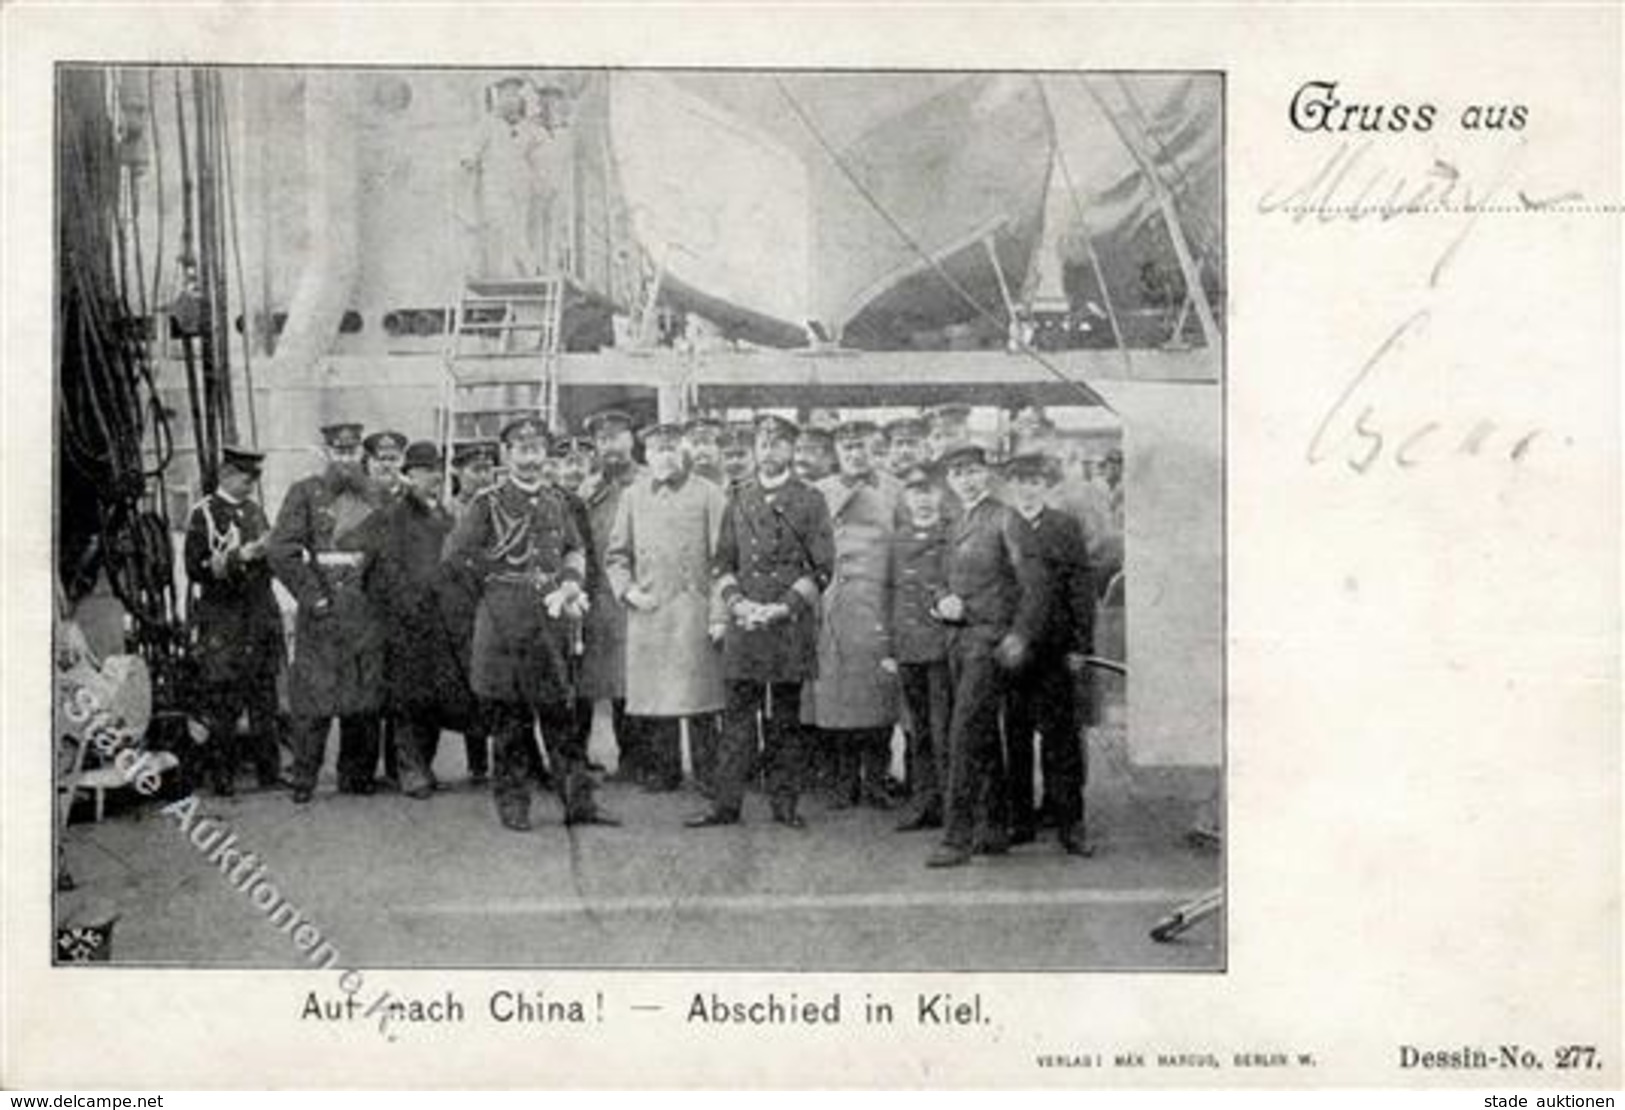 Deutsche Kolonien CHINA - Auf Nach China - Abschied In Kiel 1898 I Colonies - Non Classificati